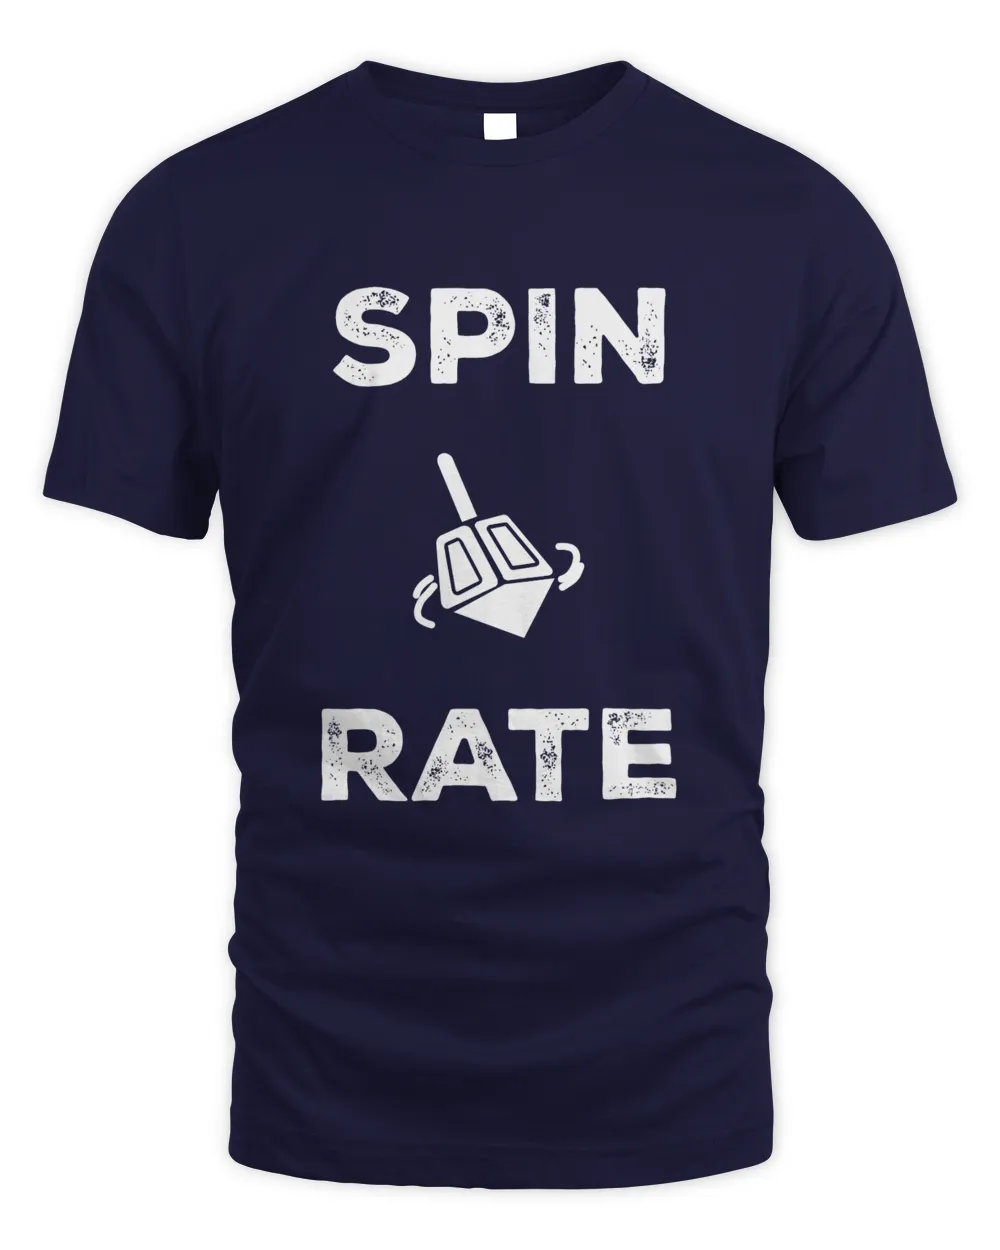 Spin Rate Israel Baseball Shirt Unisex Standard T-Shirt navy 